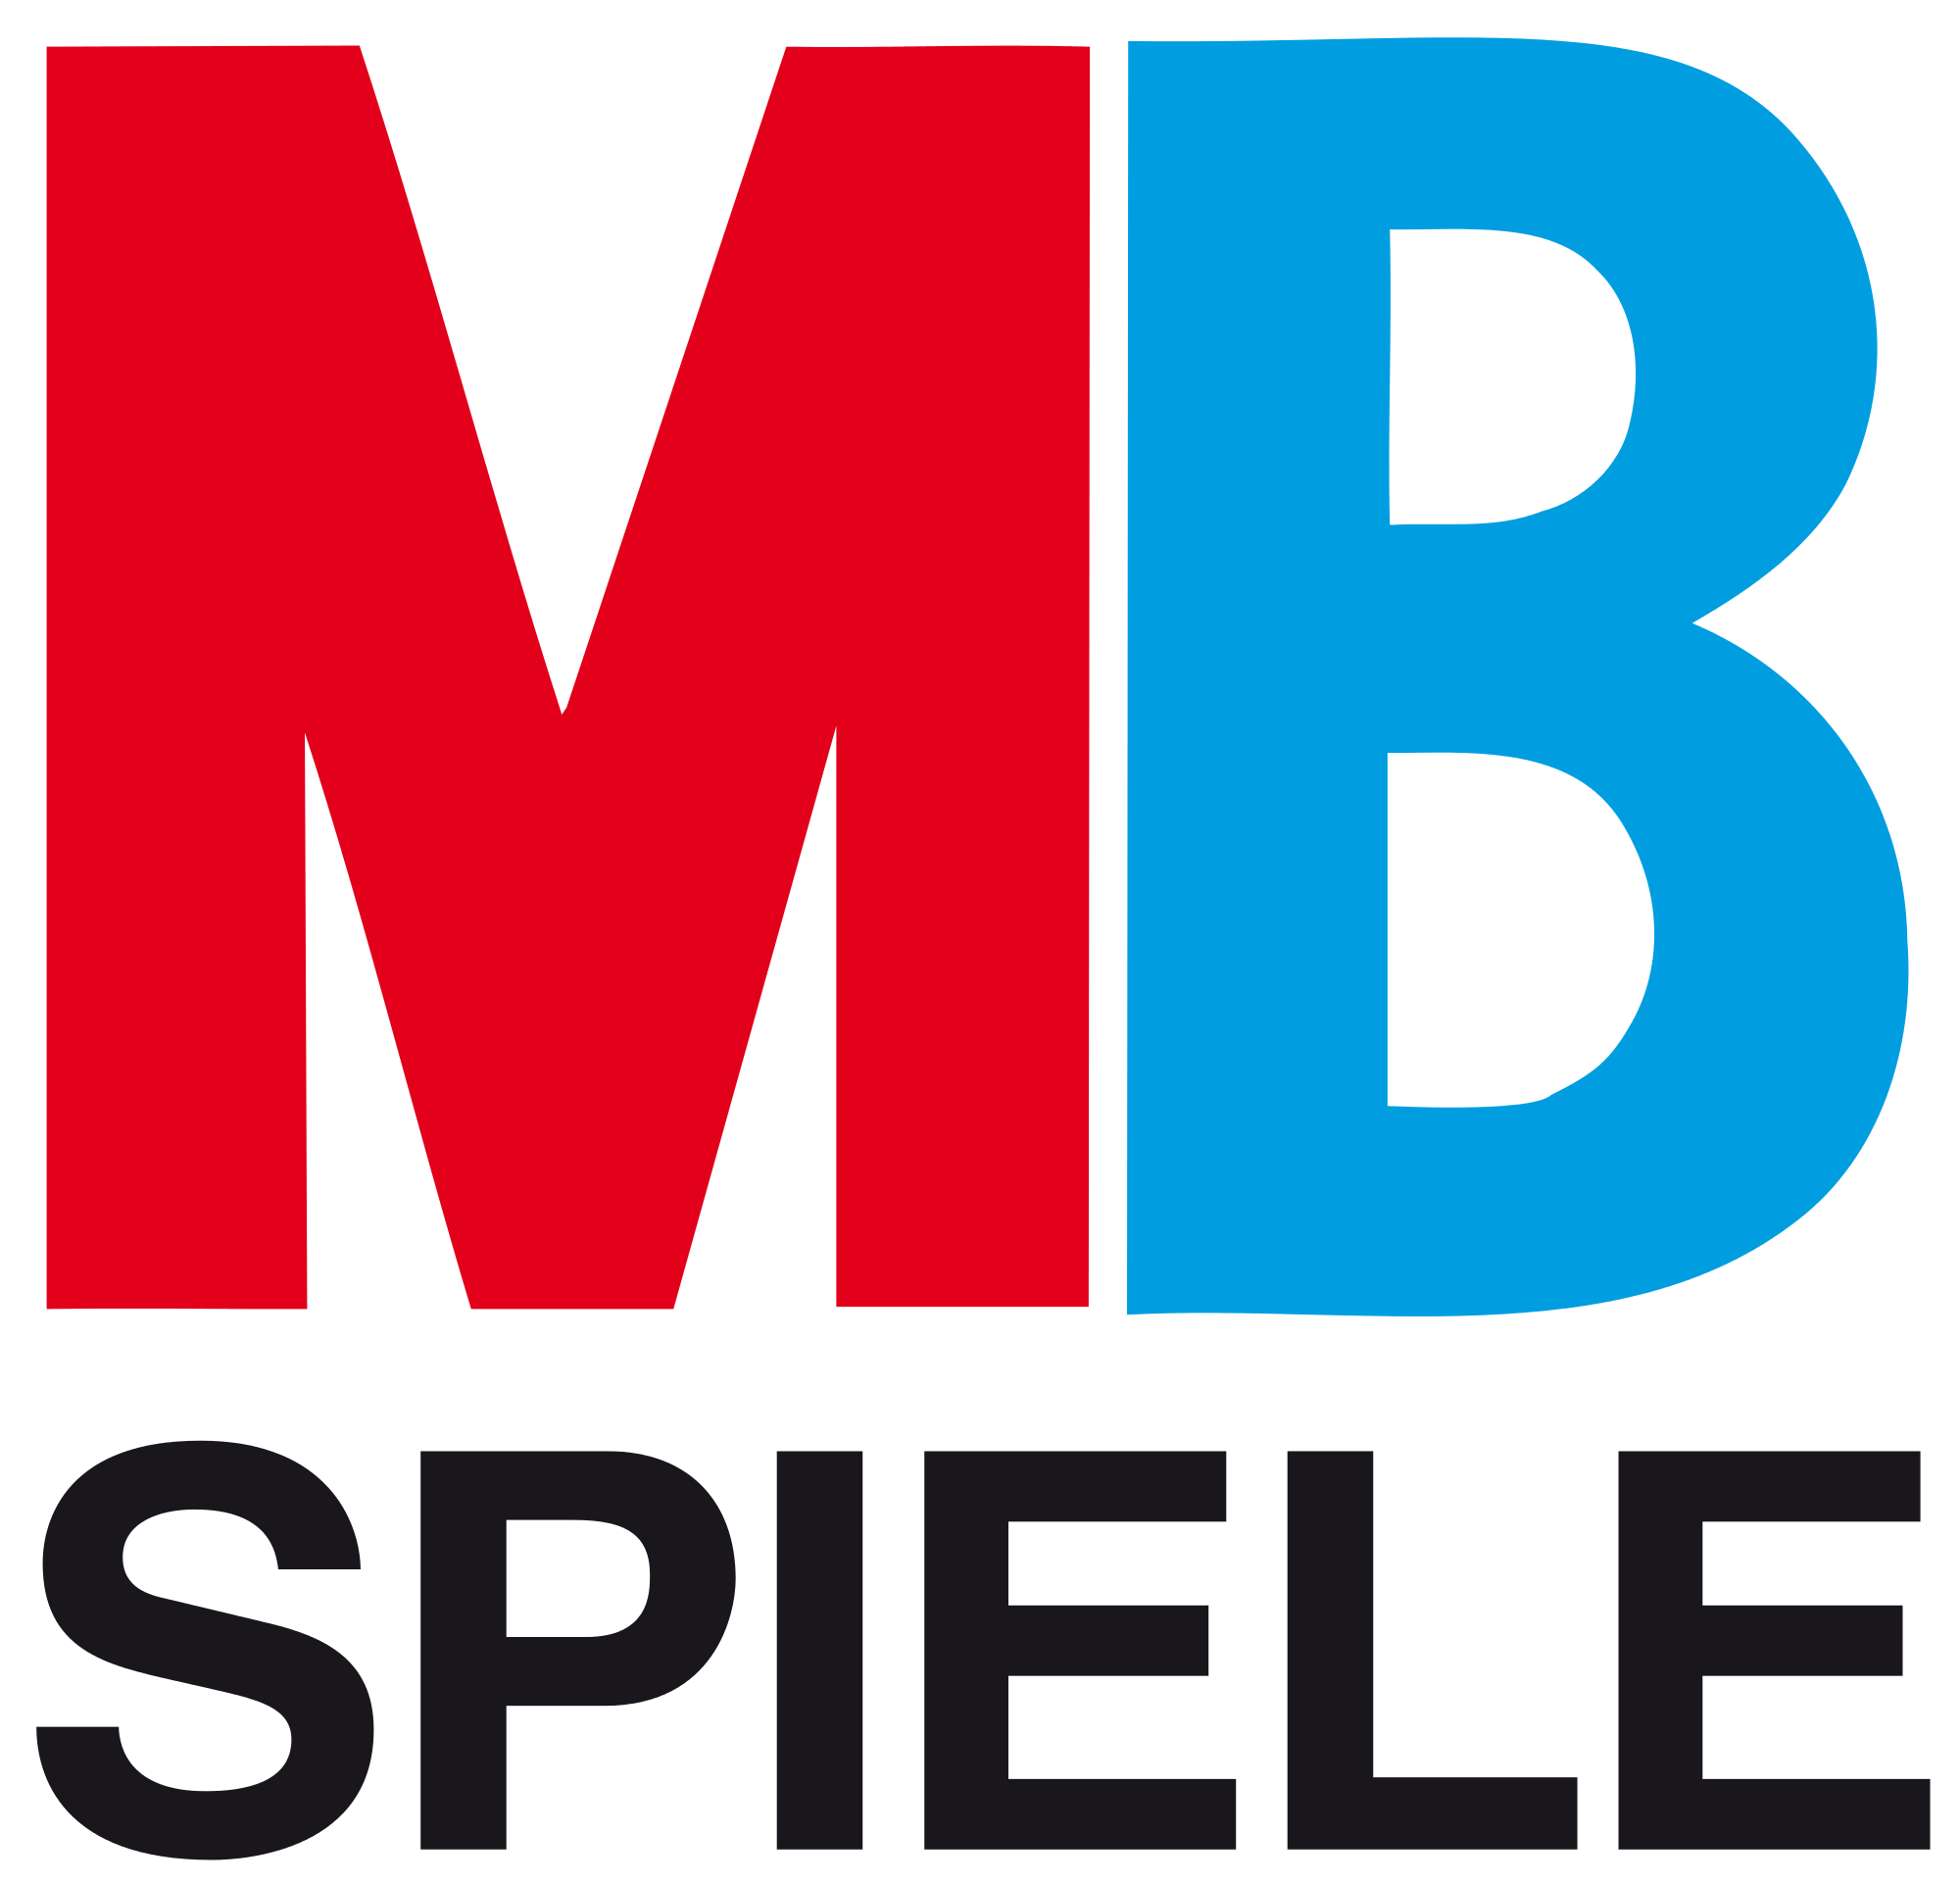 MB Logo - File:MB-Spiele-Logo.svg - Wikimedia Commons